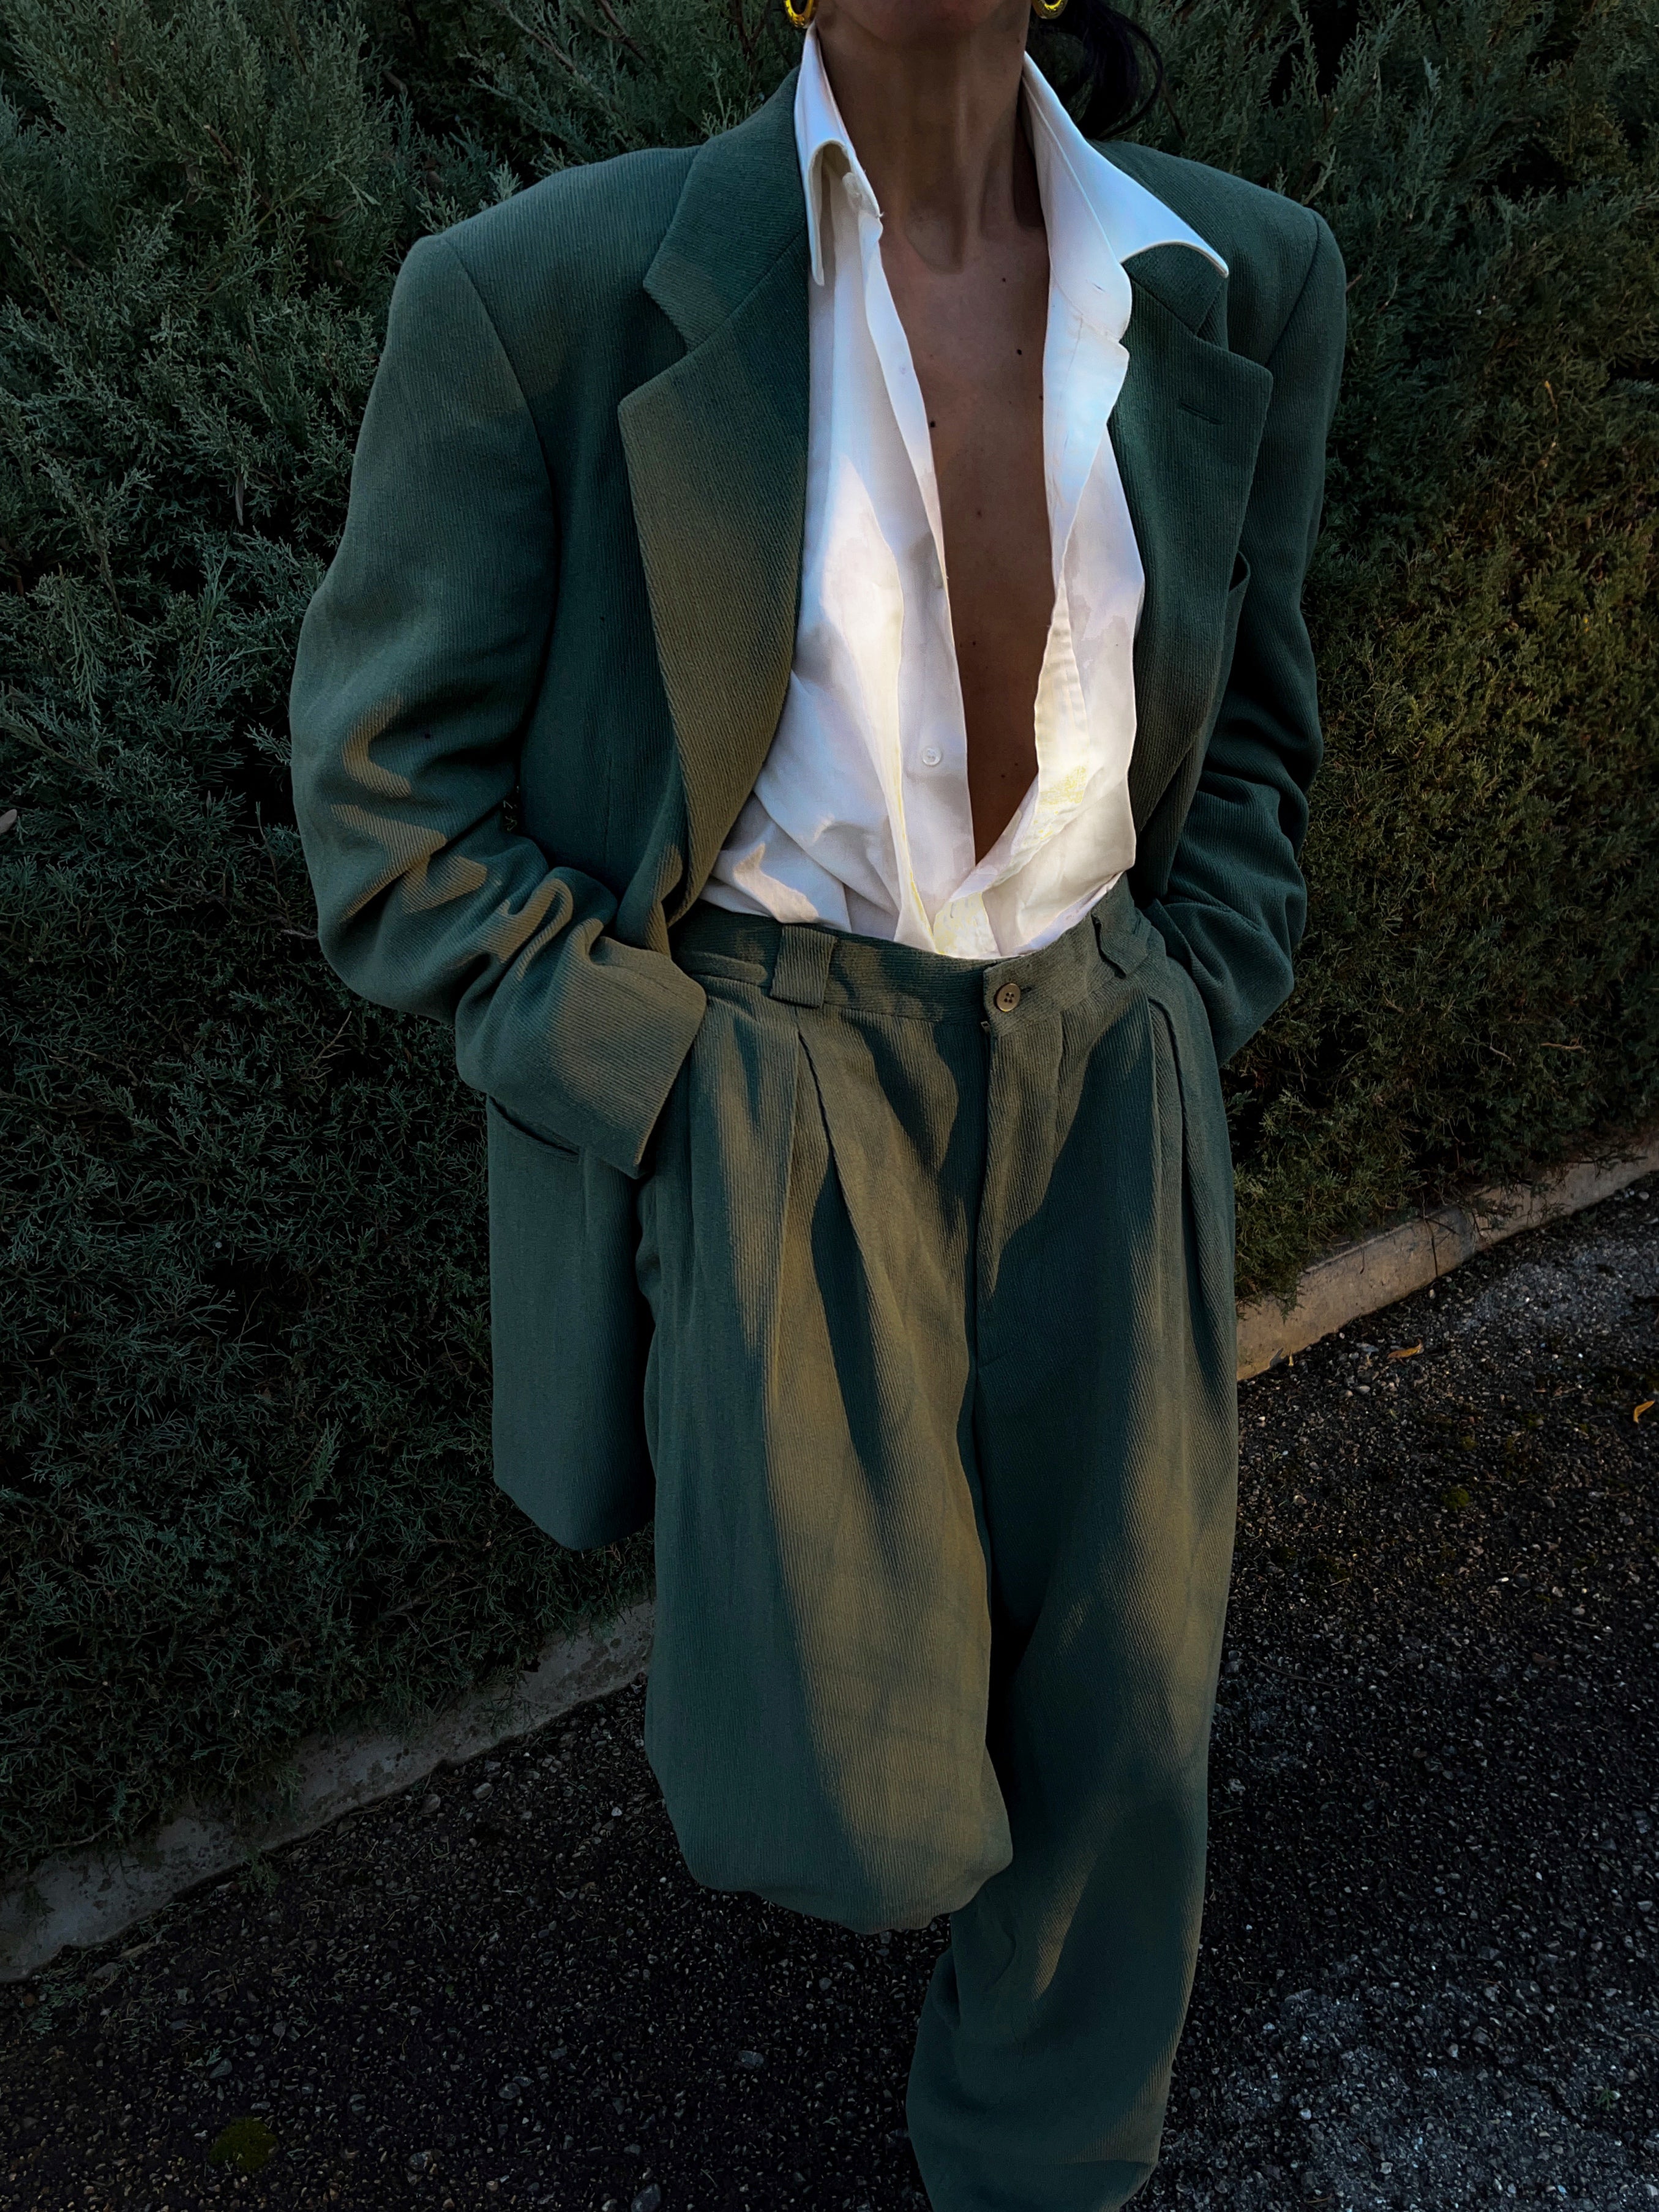 Giorgio Armani Man suit